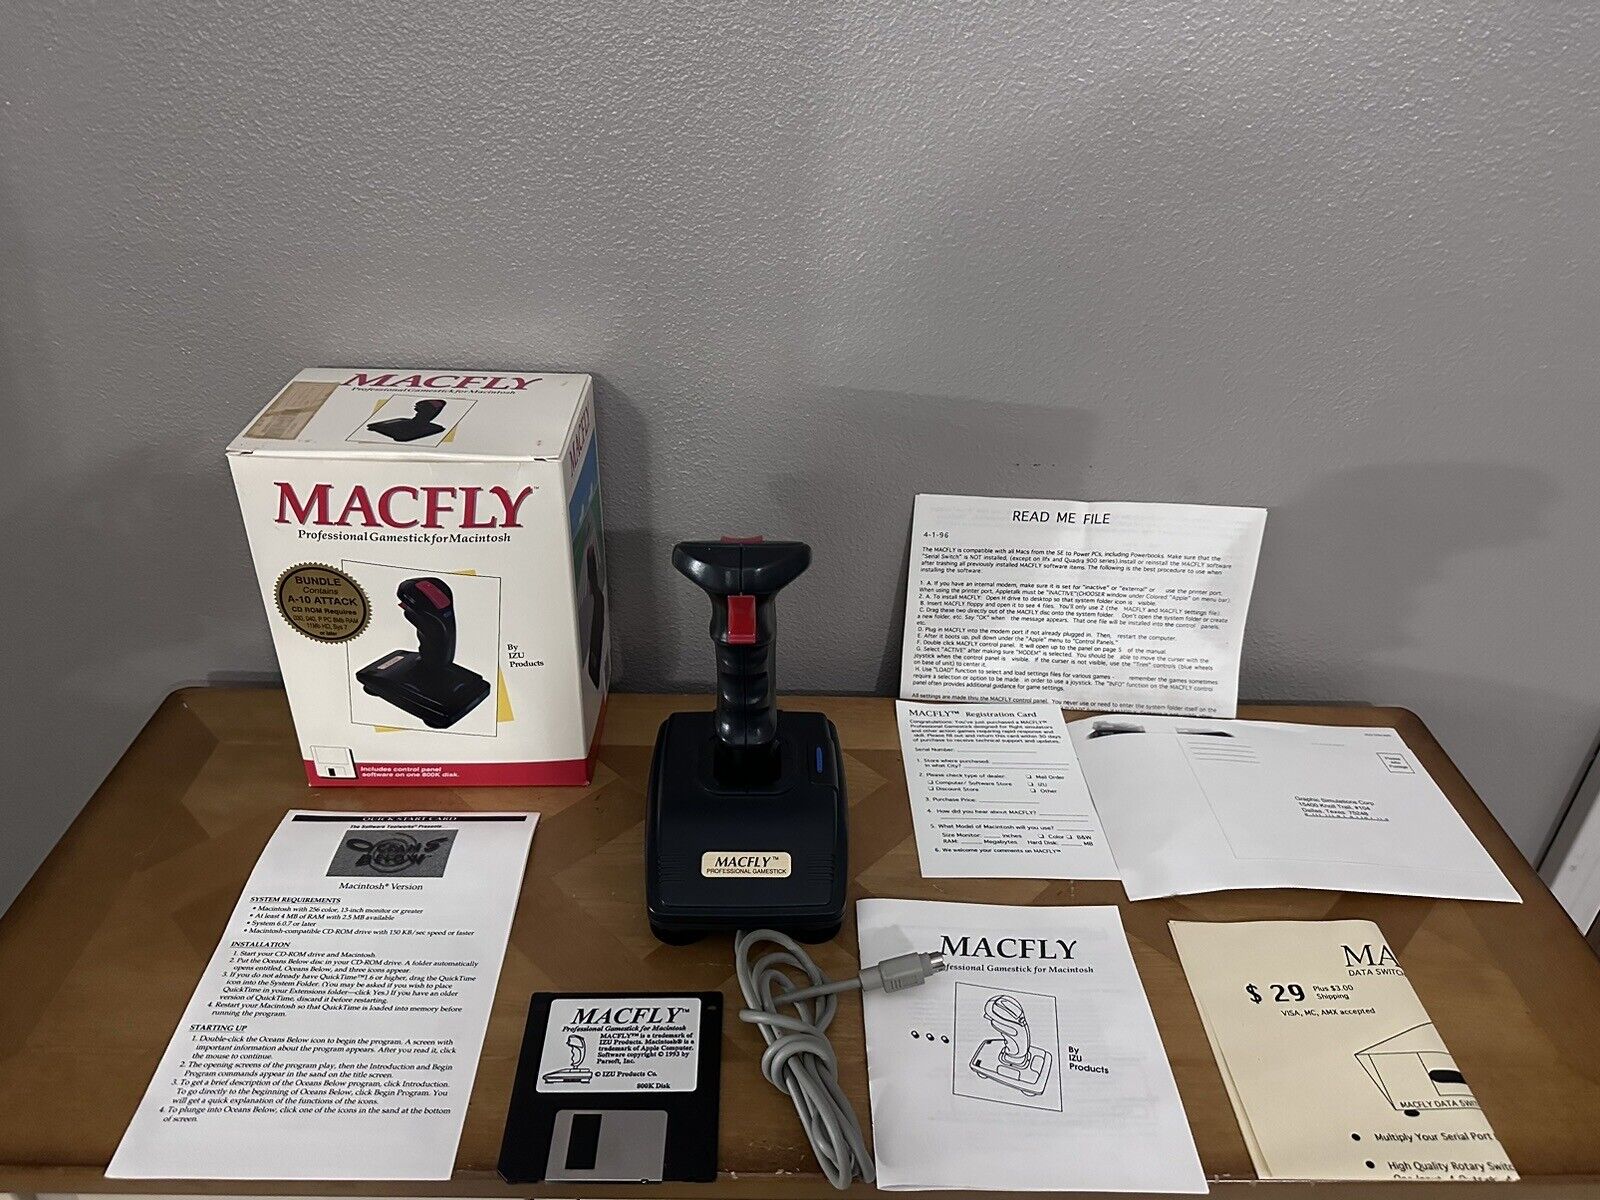 MACFLY PROFESSIONAL GAMESTICK FOR MACINTOSH Apple W/ Floppy Disc Vintage 90s